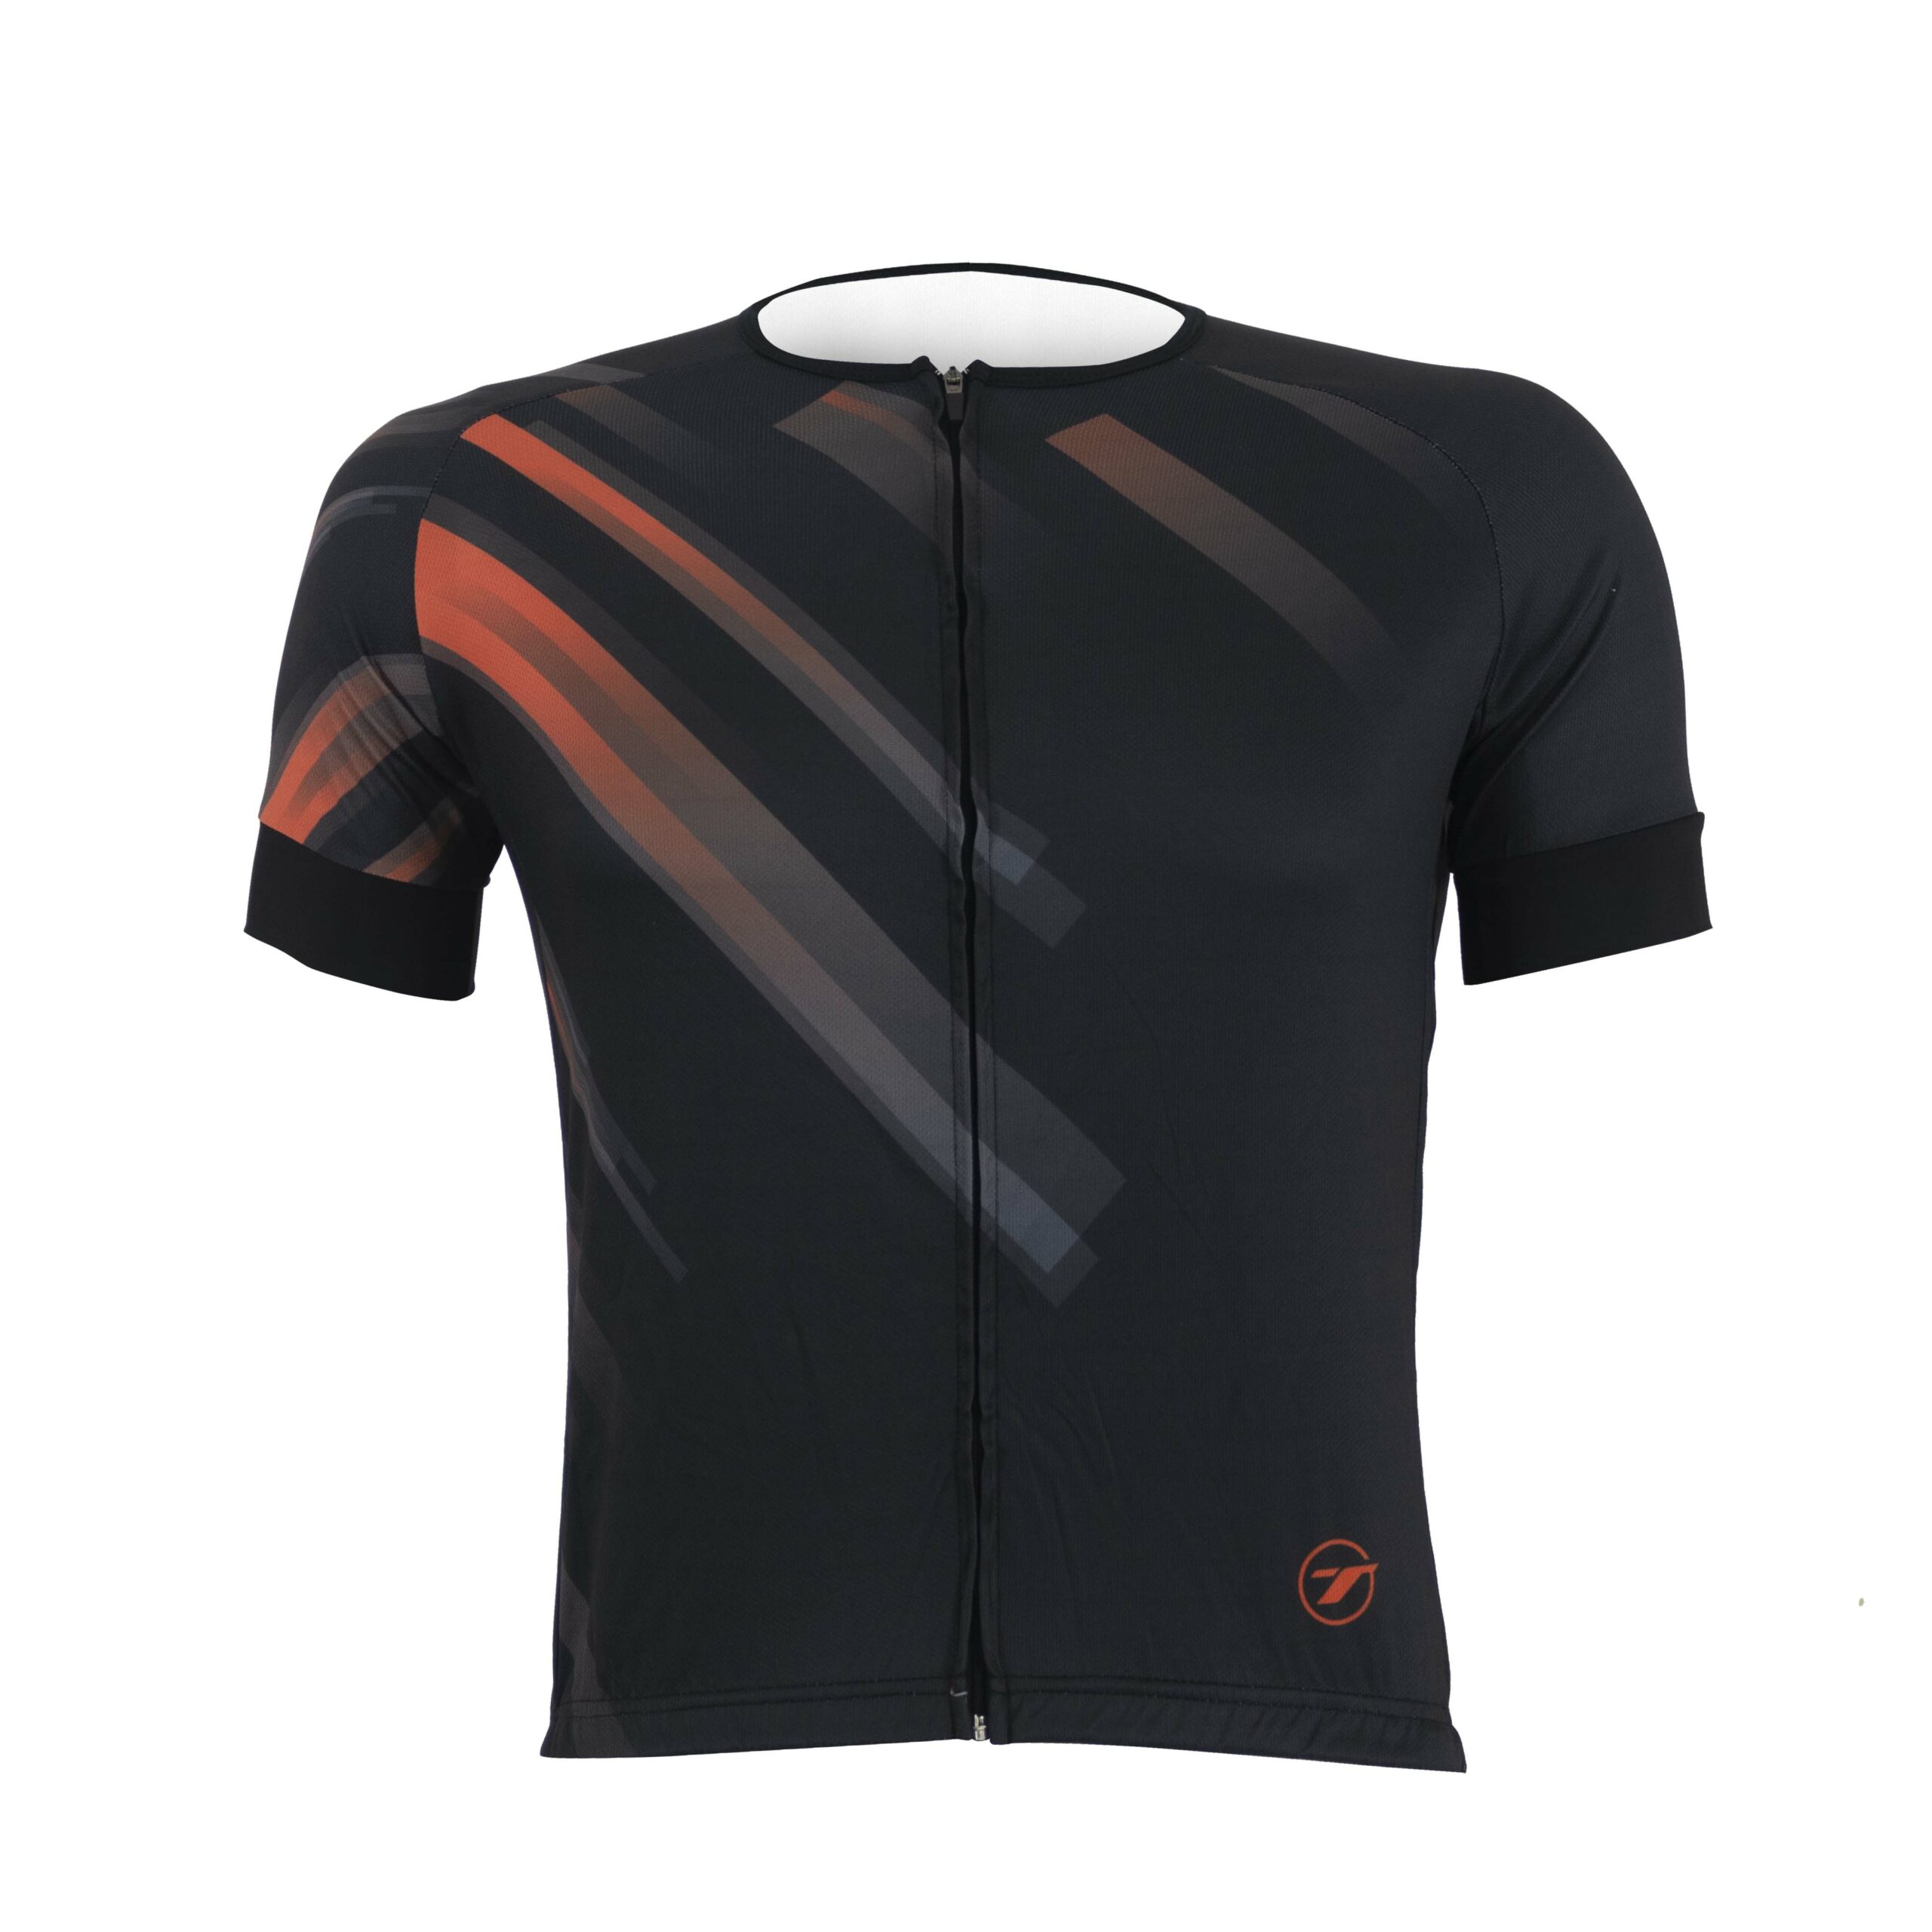 Camisa para ciclismo SUNNY | RIDE LINE - Preto/Laranja, M